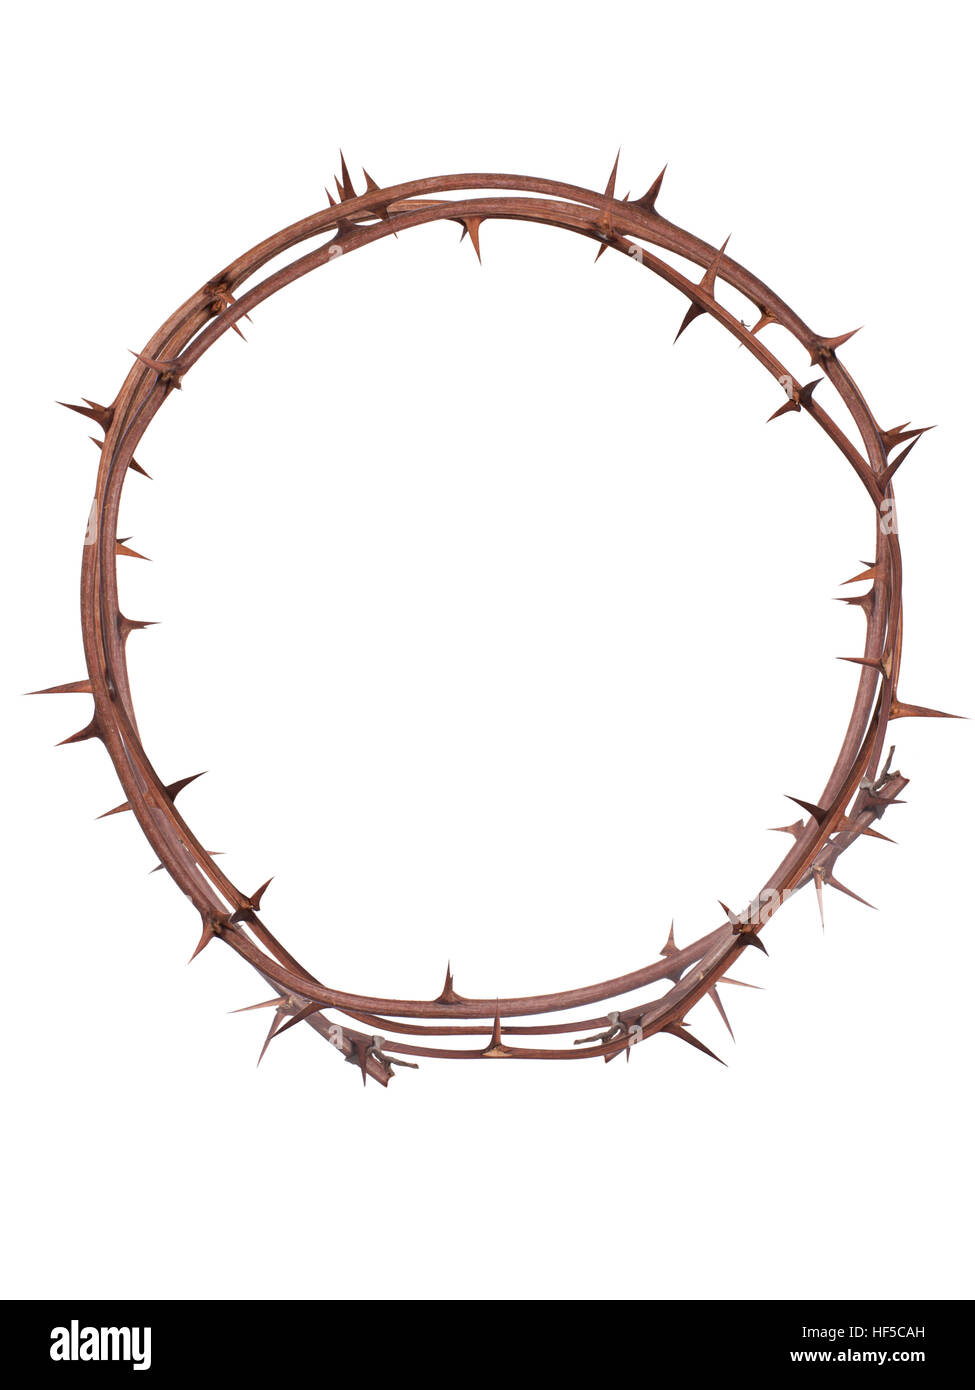 Crown of thorns. Easter symbol, Christian faith. Stock Photo